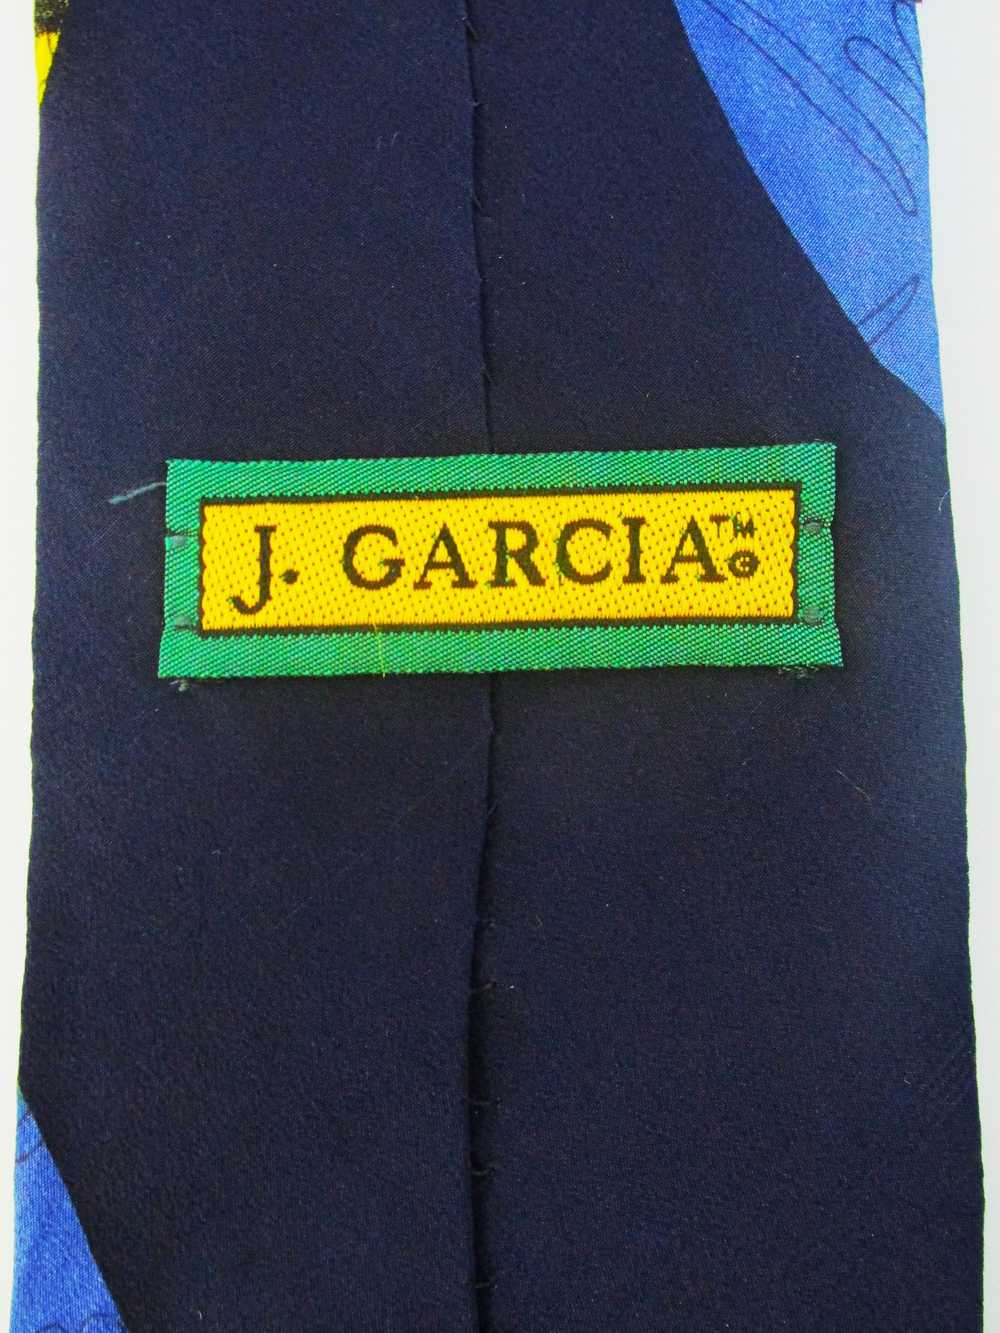 Vintage J. Garcia Vintage/Early Men's Silk Tie - image 4